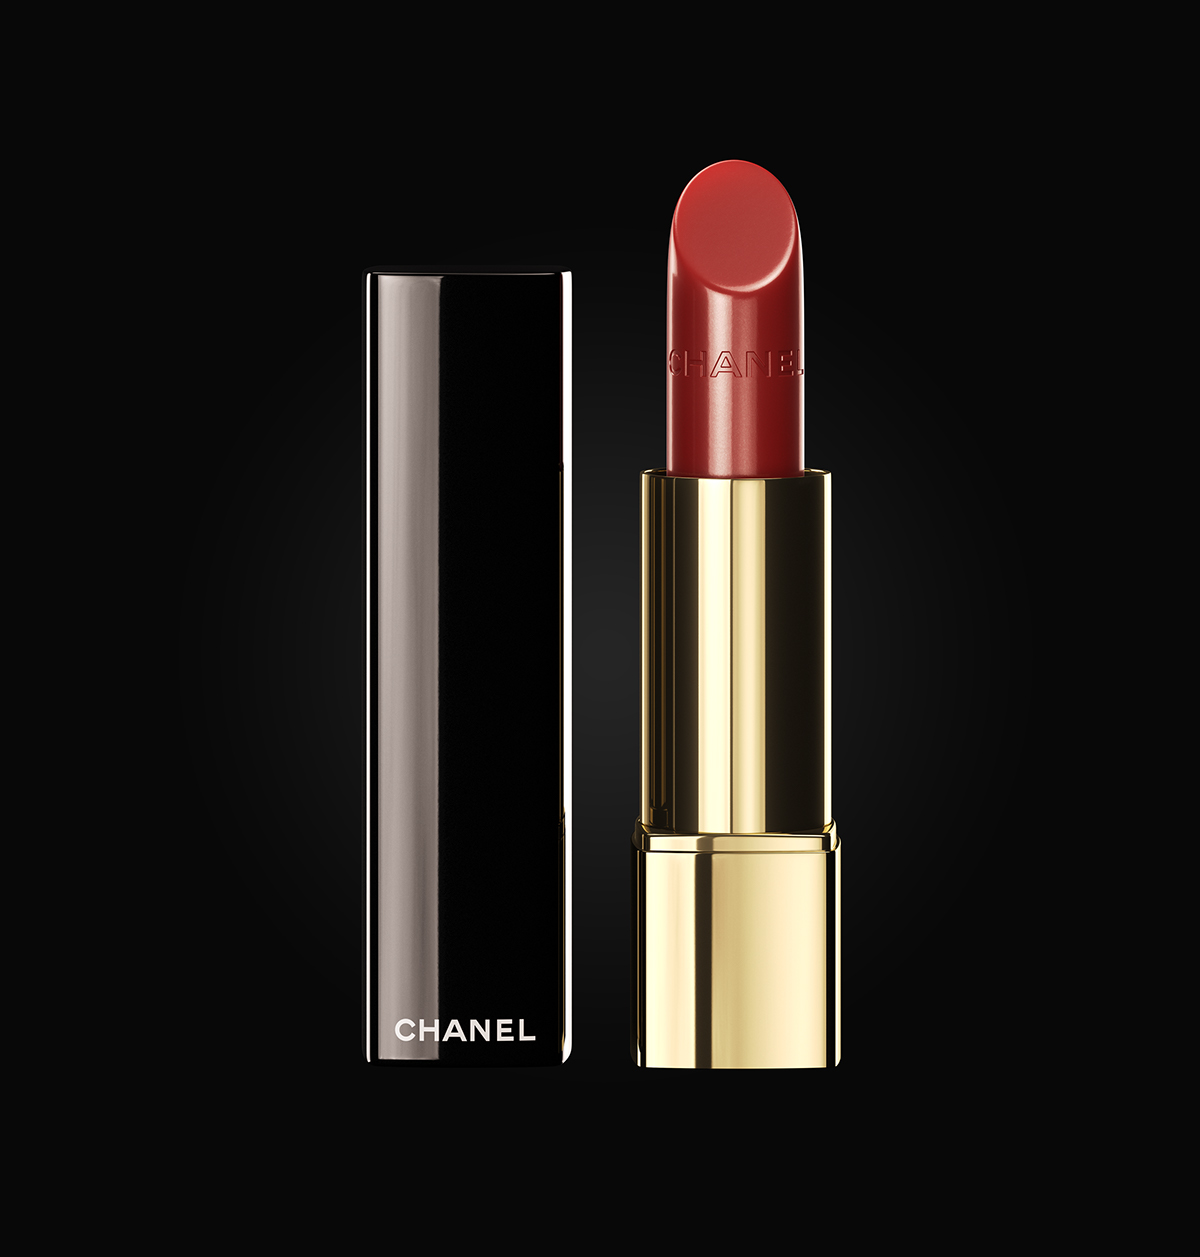 lipstick chanel hdr light studio HDR vray 3dsmax HardSurface Procedural